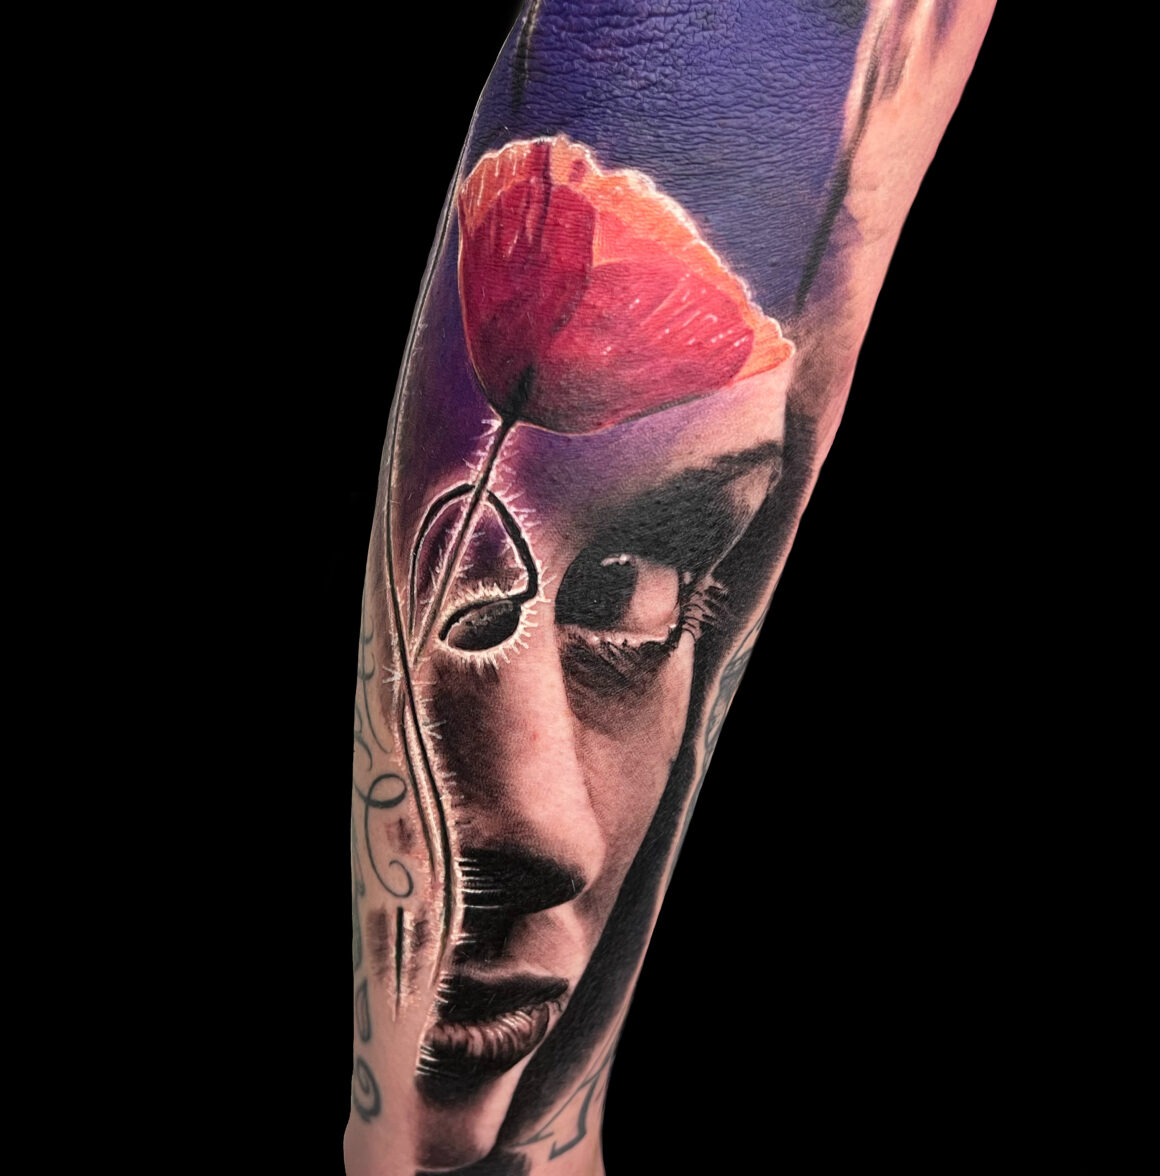 Mauro Alberti, InKing Tattoo Studio, Caldogno, Vicenza